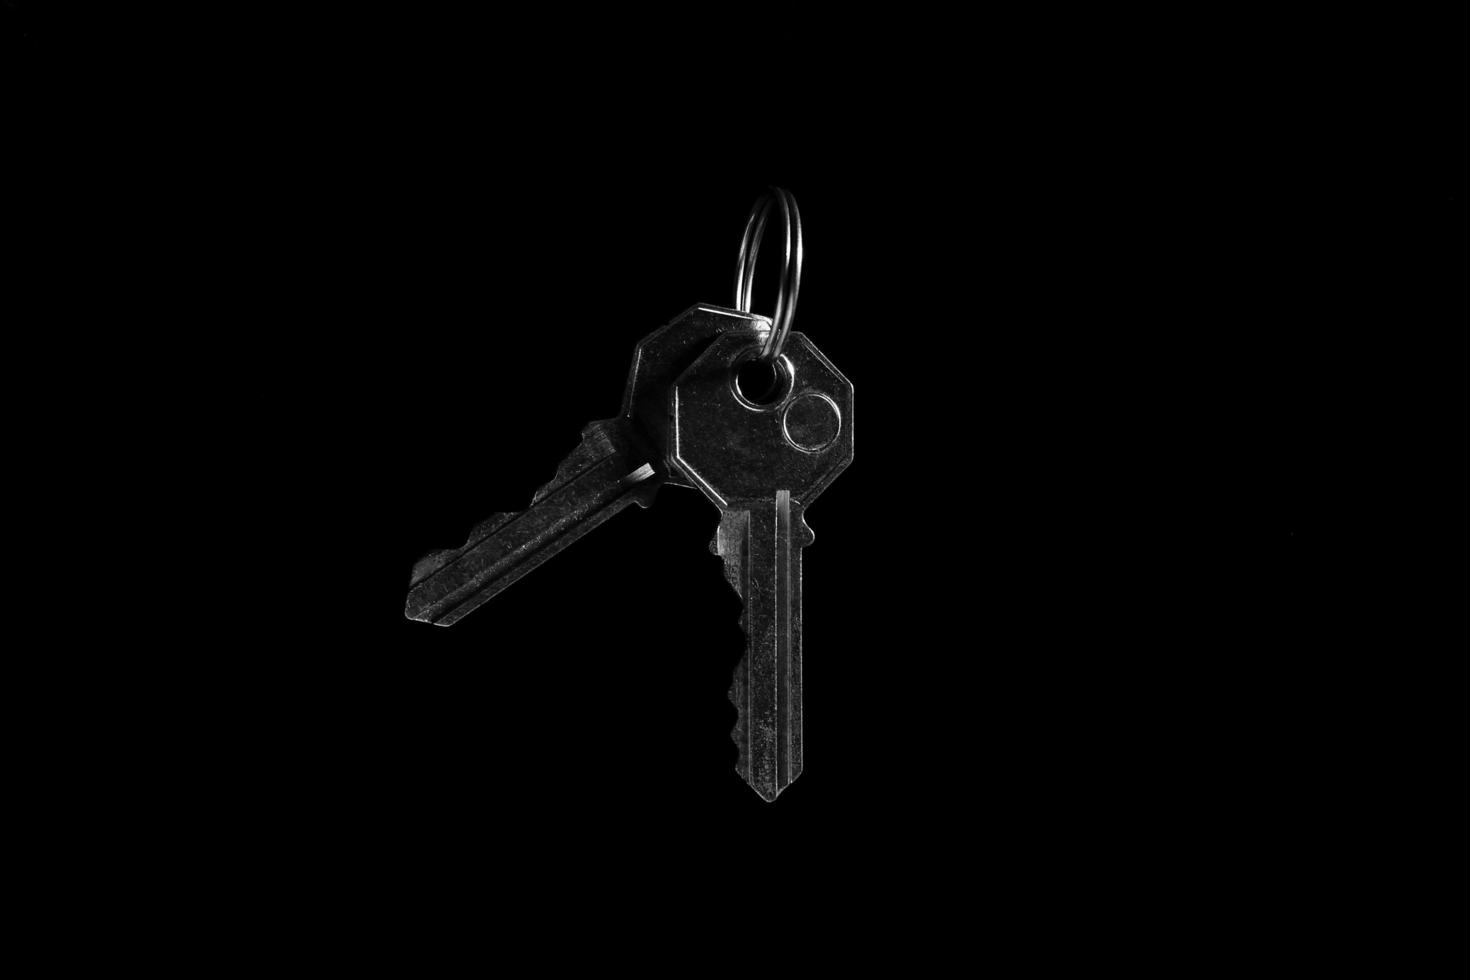 nycklar flytande i djup Plats foto